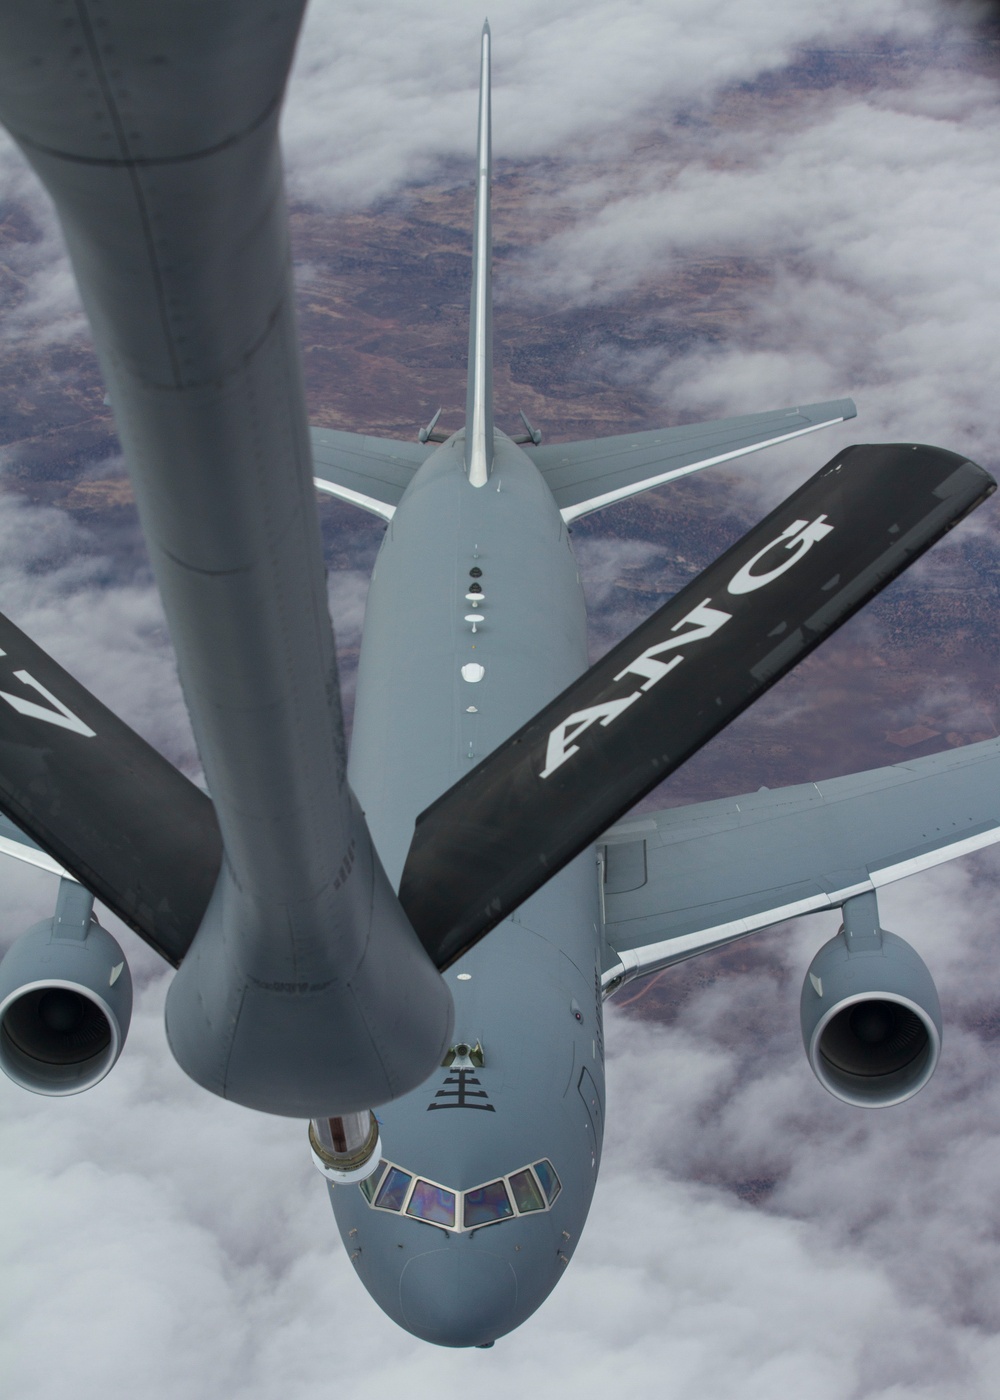 UTANG provides air refueling training to KC-46 crew